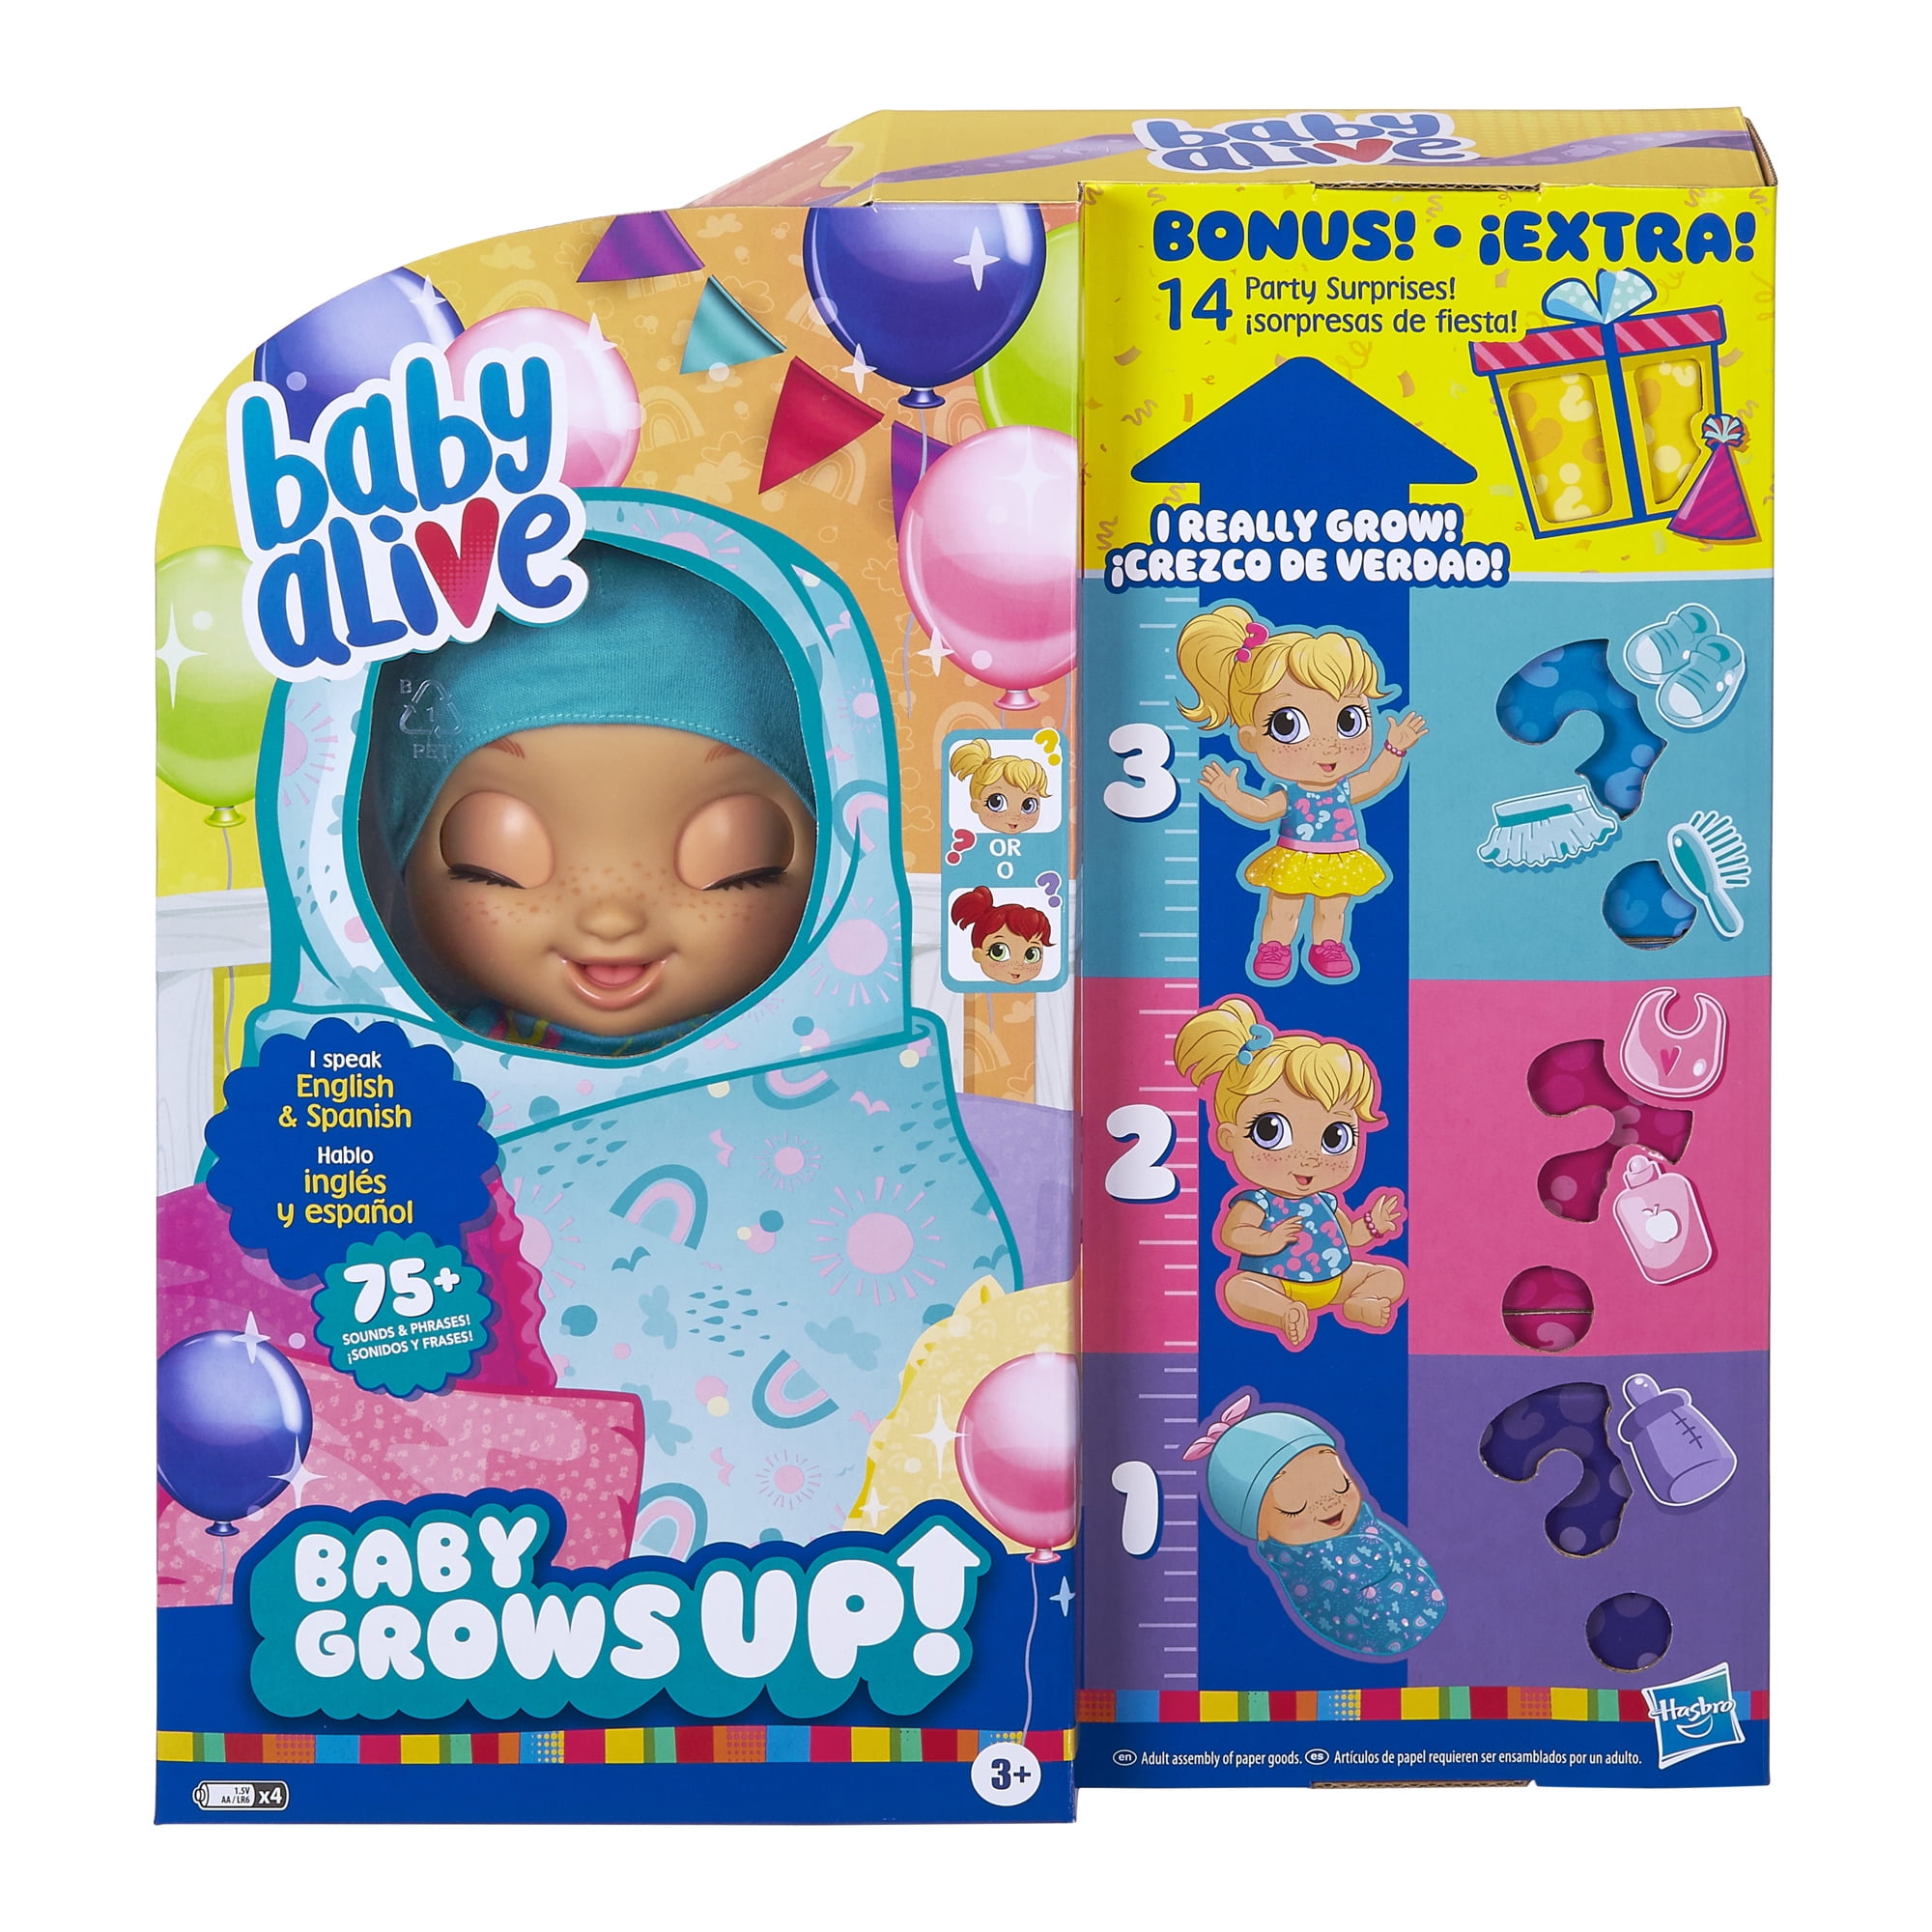 Only At Walmart: Baby Alive Baby Grows Up Bonus Pack, 14 BONUS Party Surprises